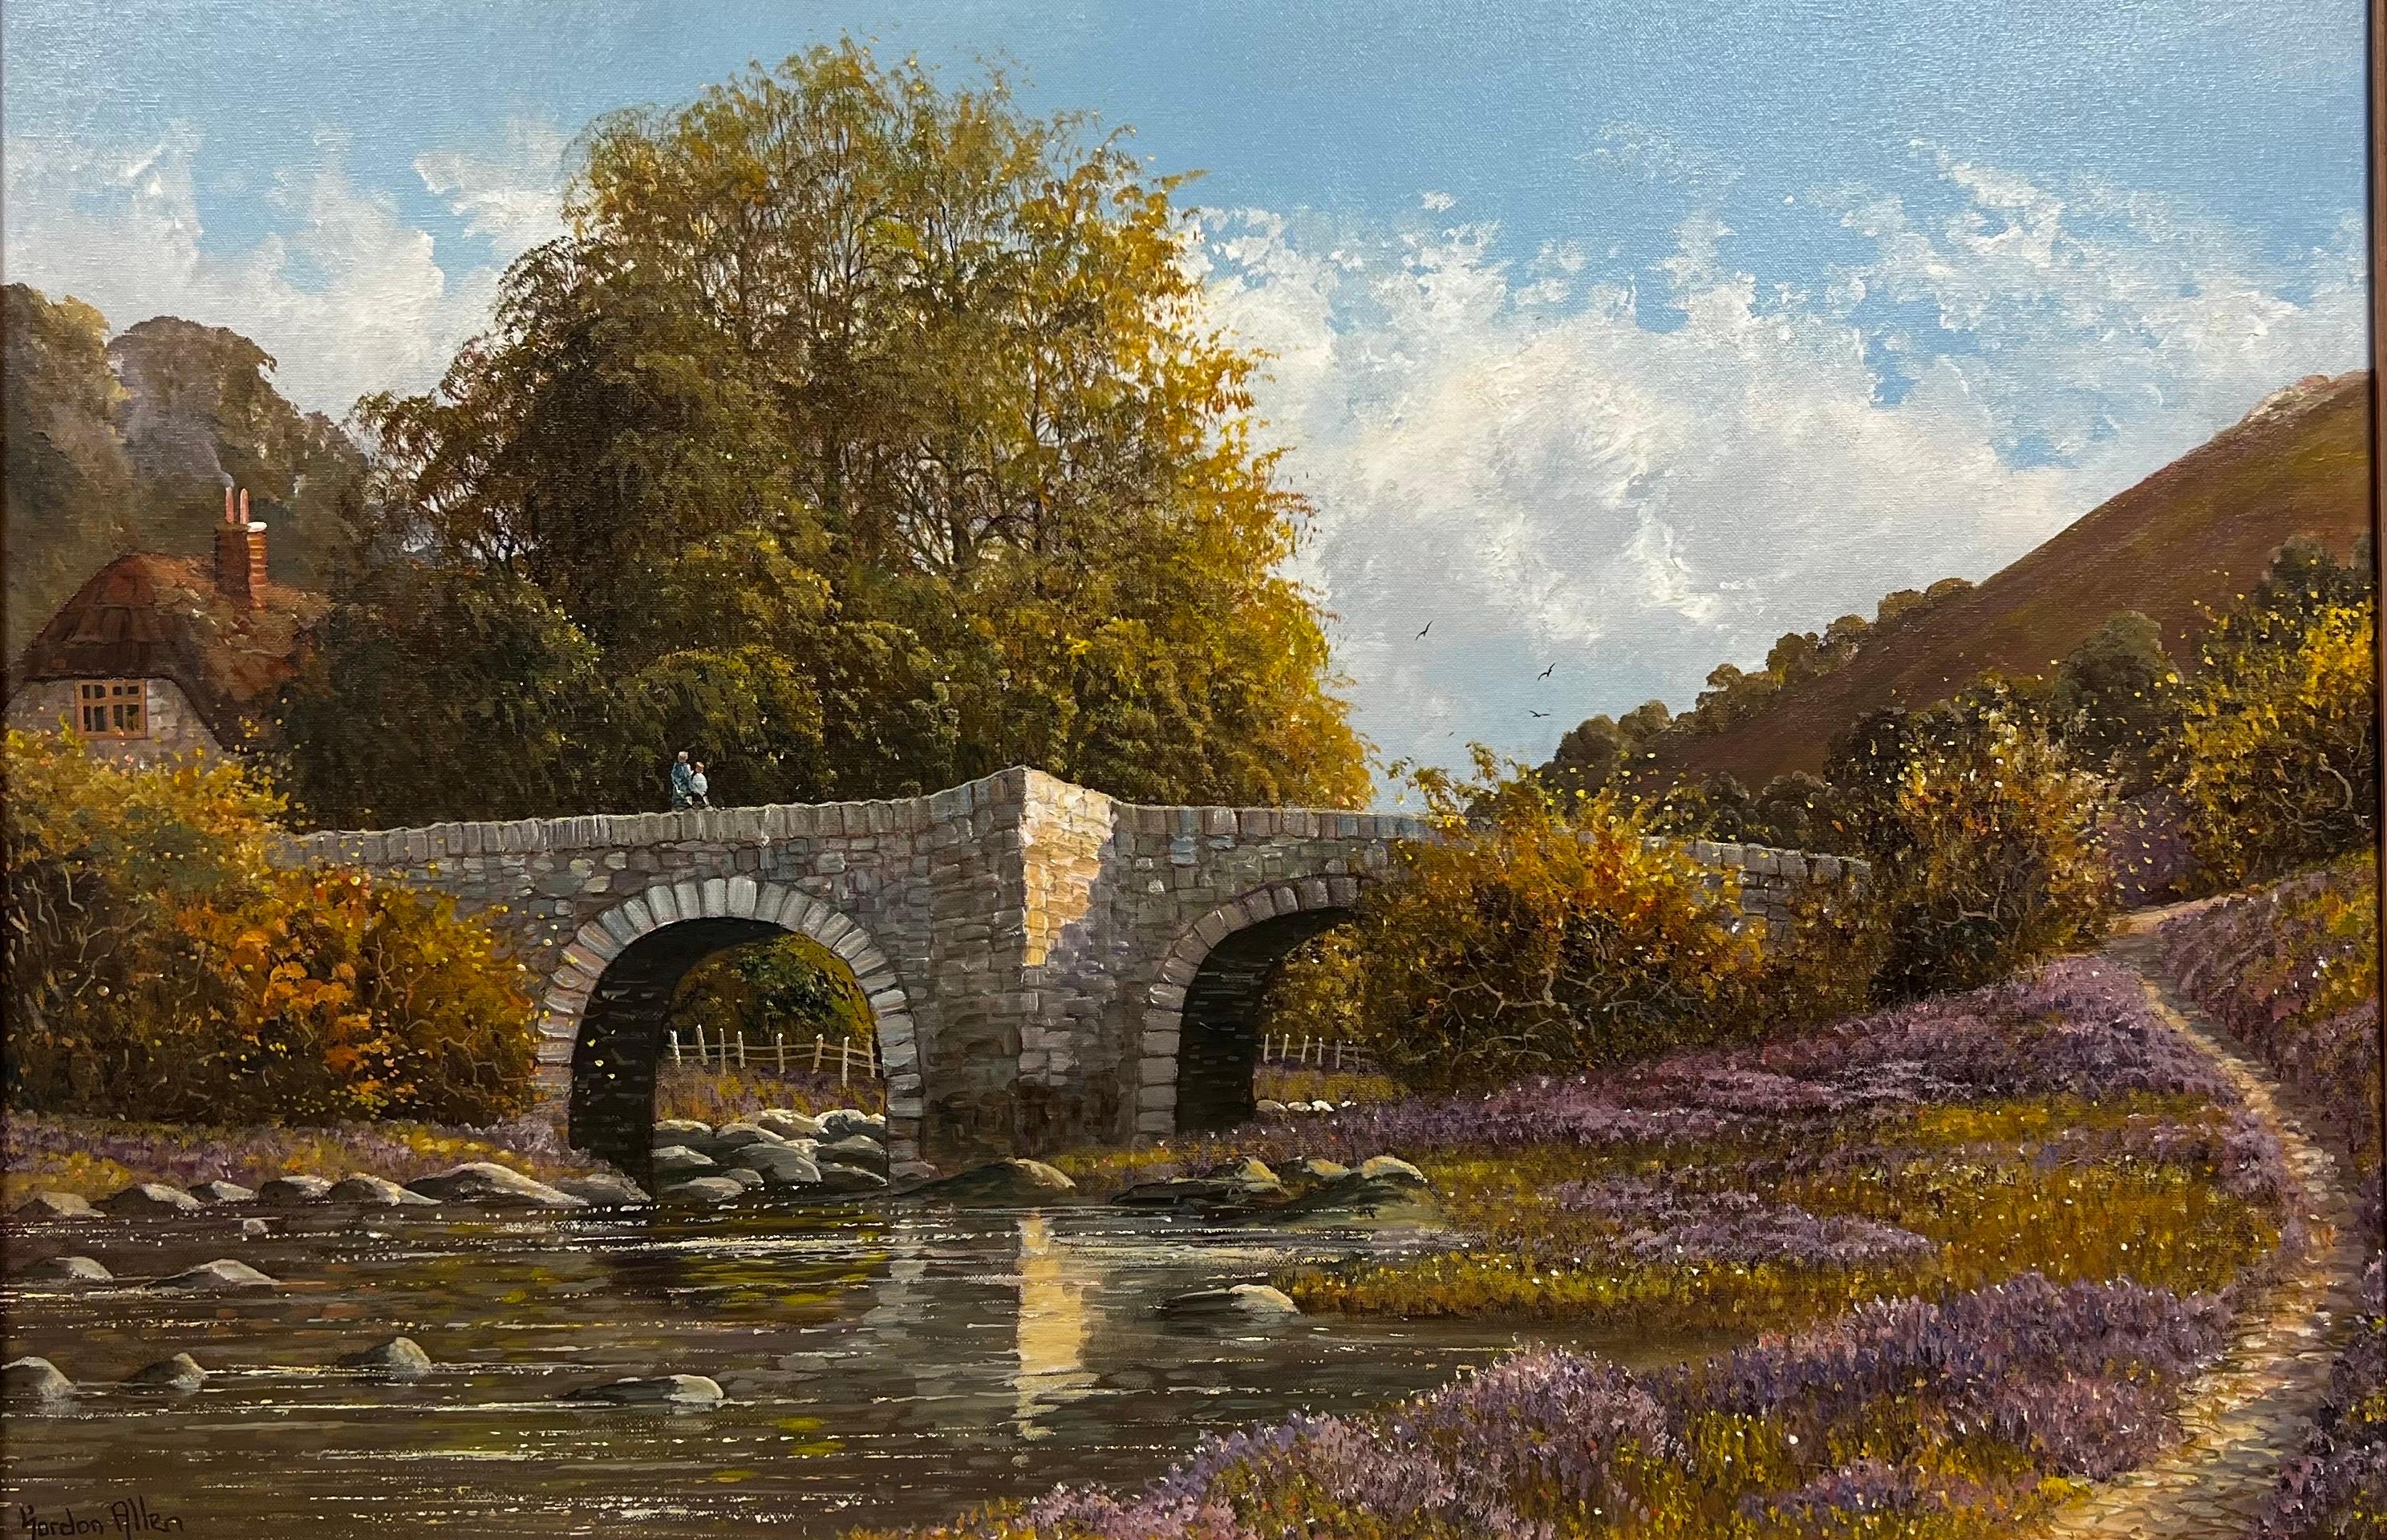 Gordon Allen Figurative Painting - Tranquil English River Landscape with old Stone Bridge, signed original oil